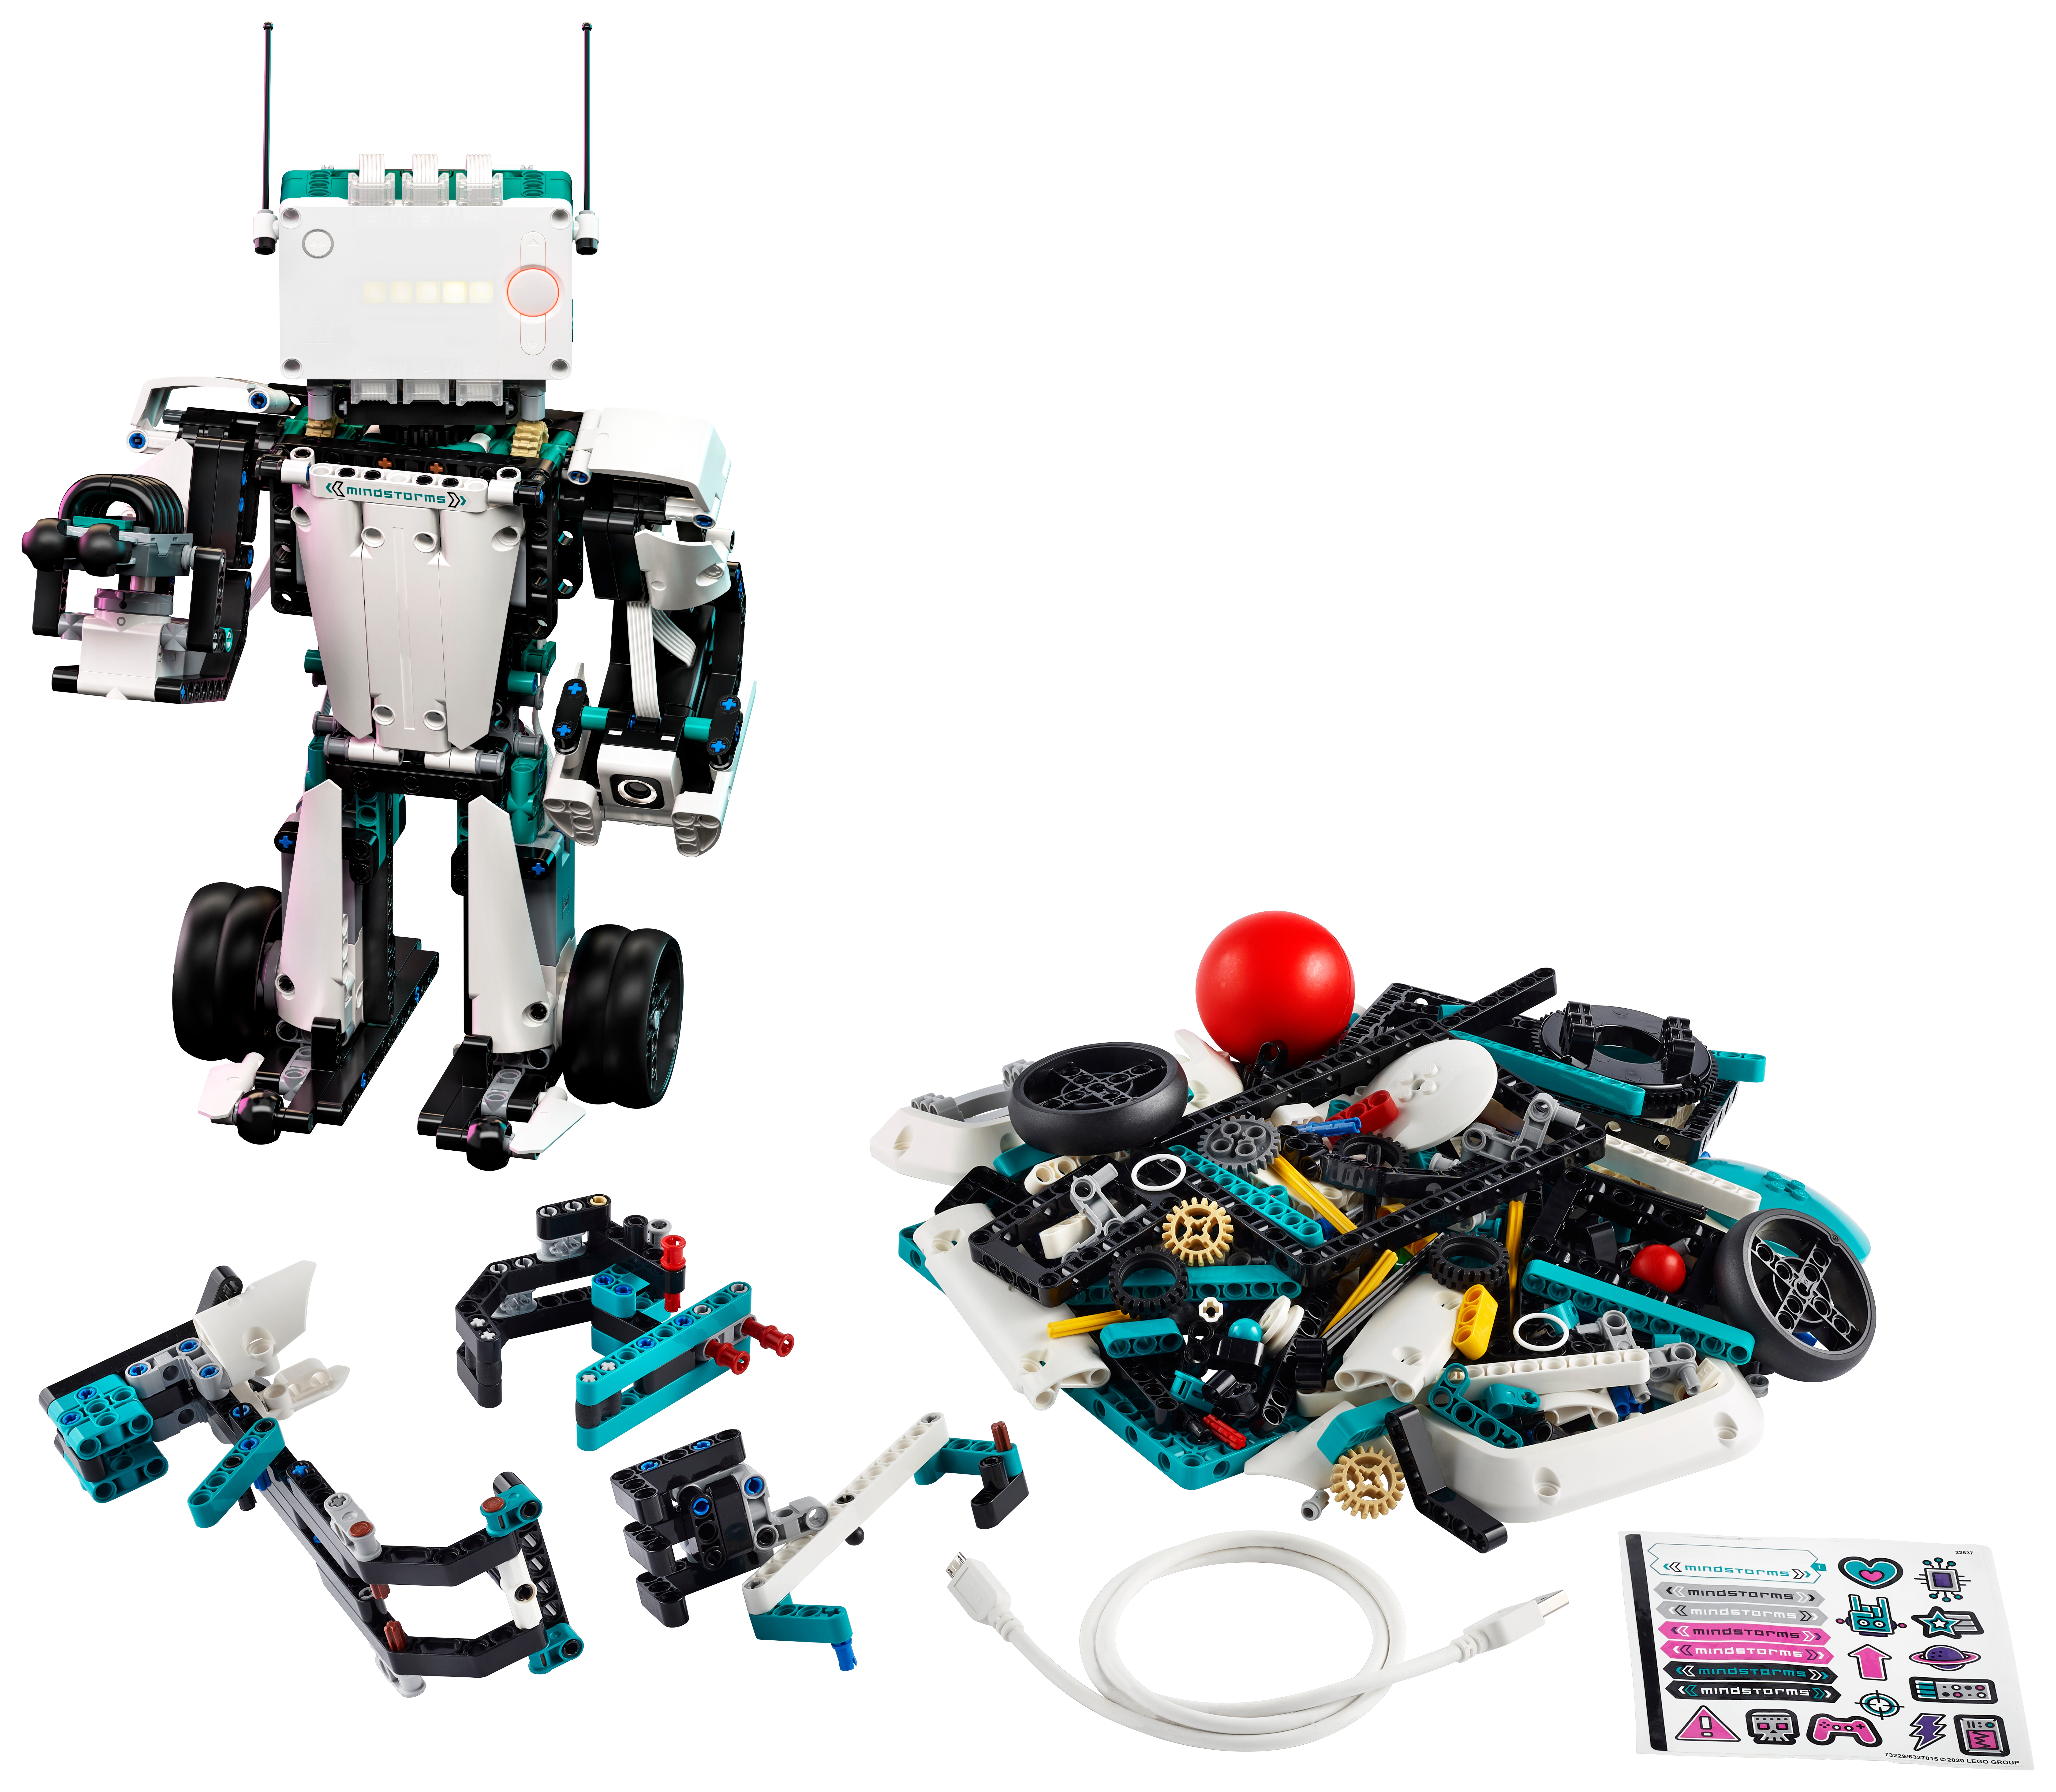 Trampe Woods Footpad LEGO MINDSTORMS Robot Inventor - About Us - LEGO.com